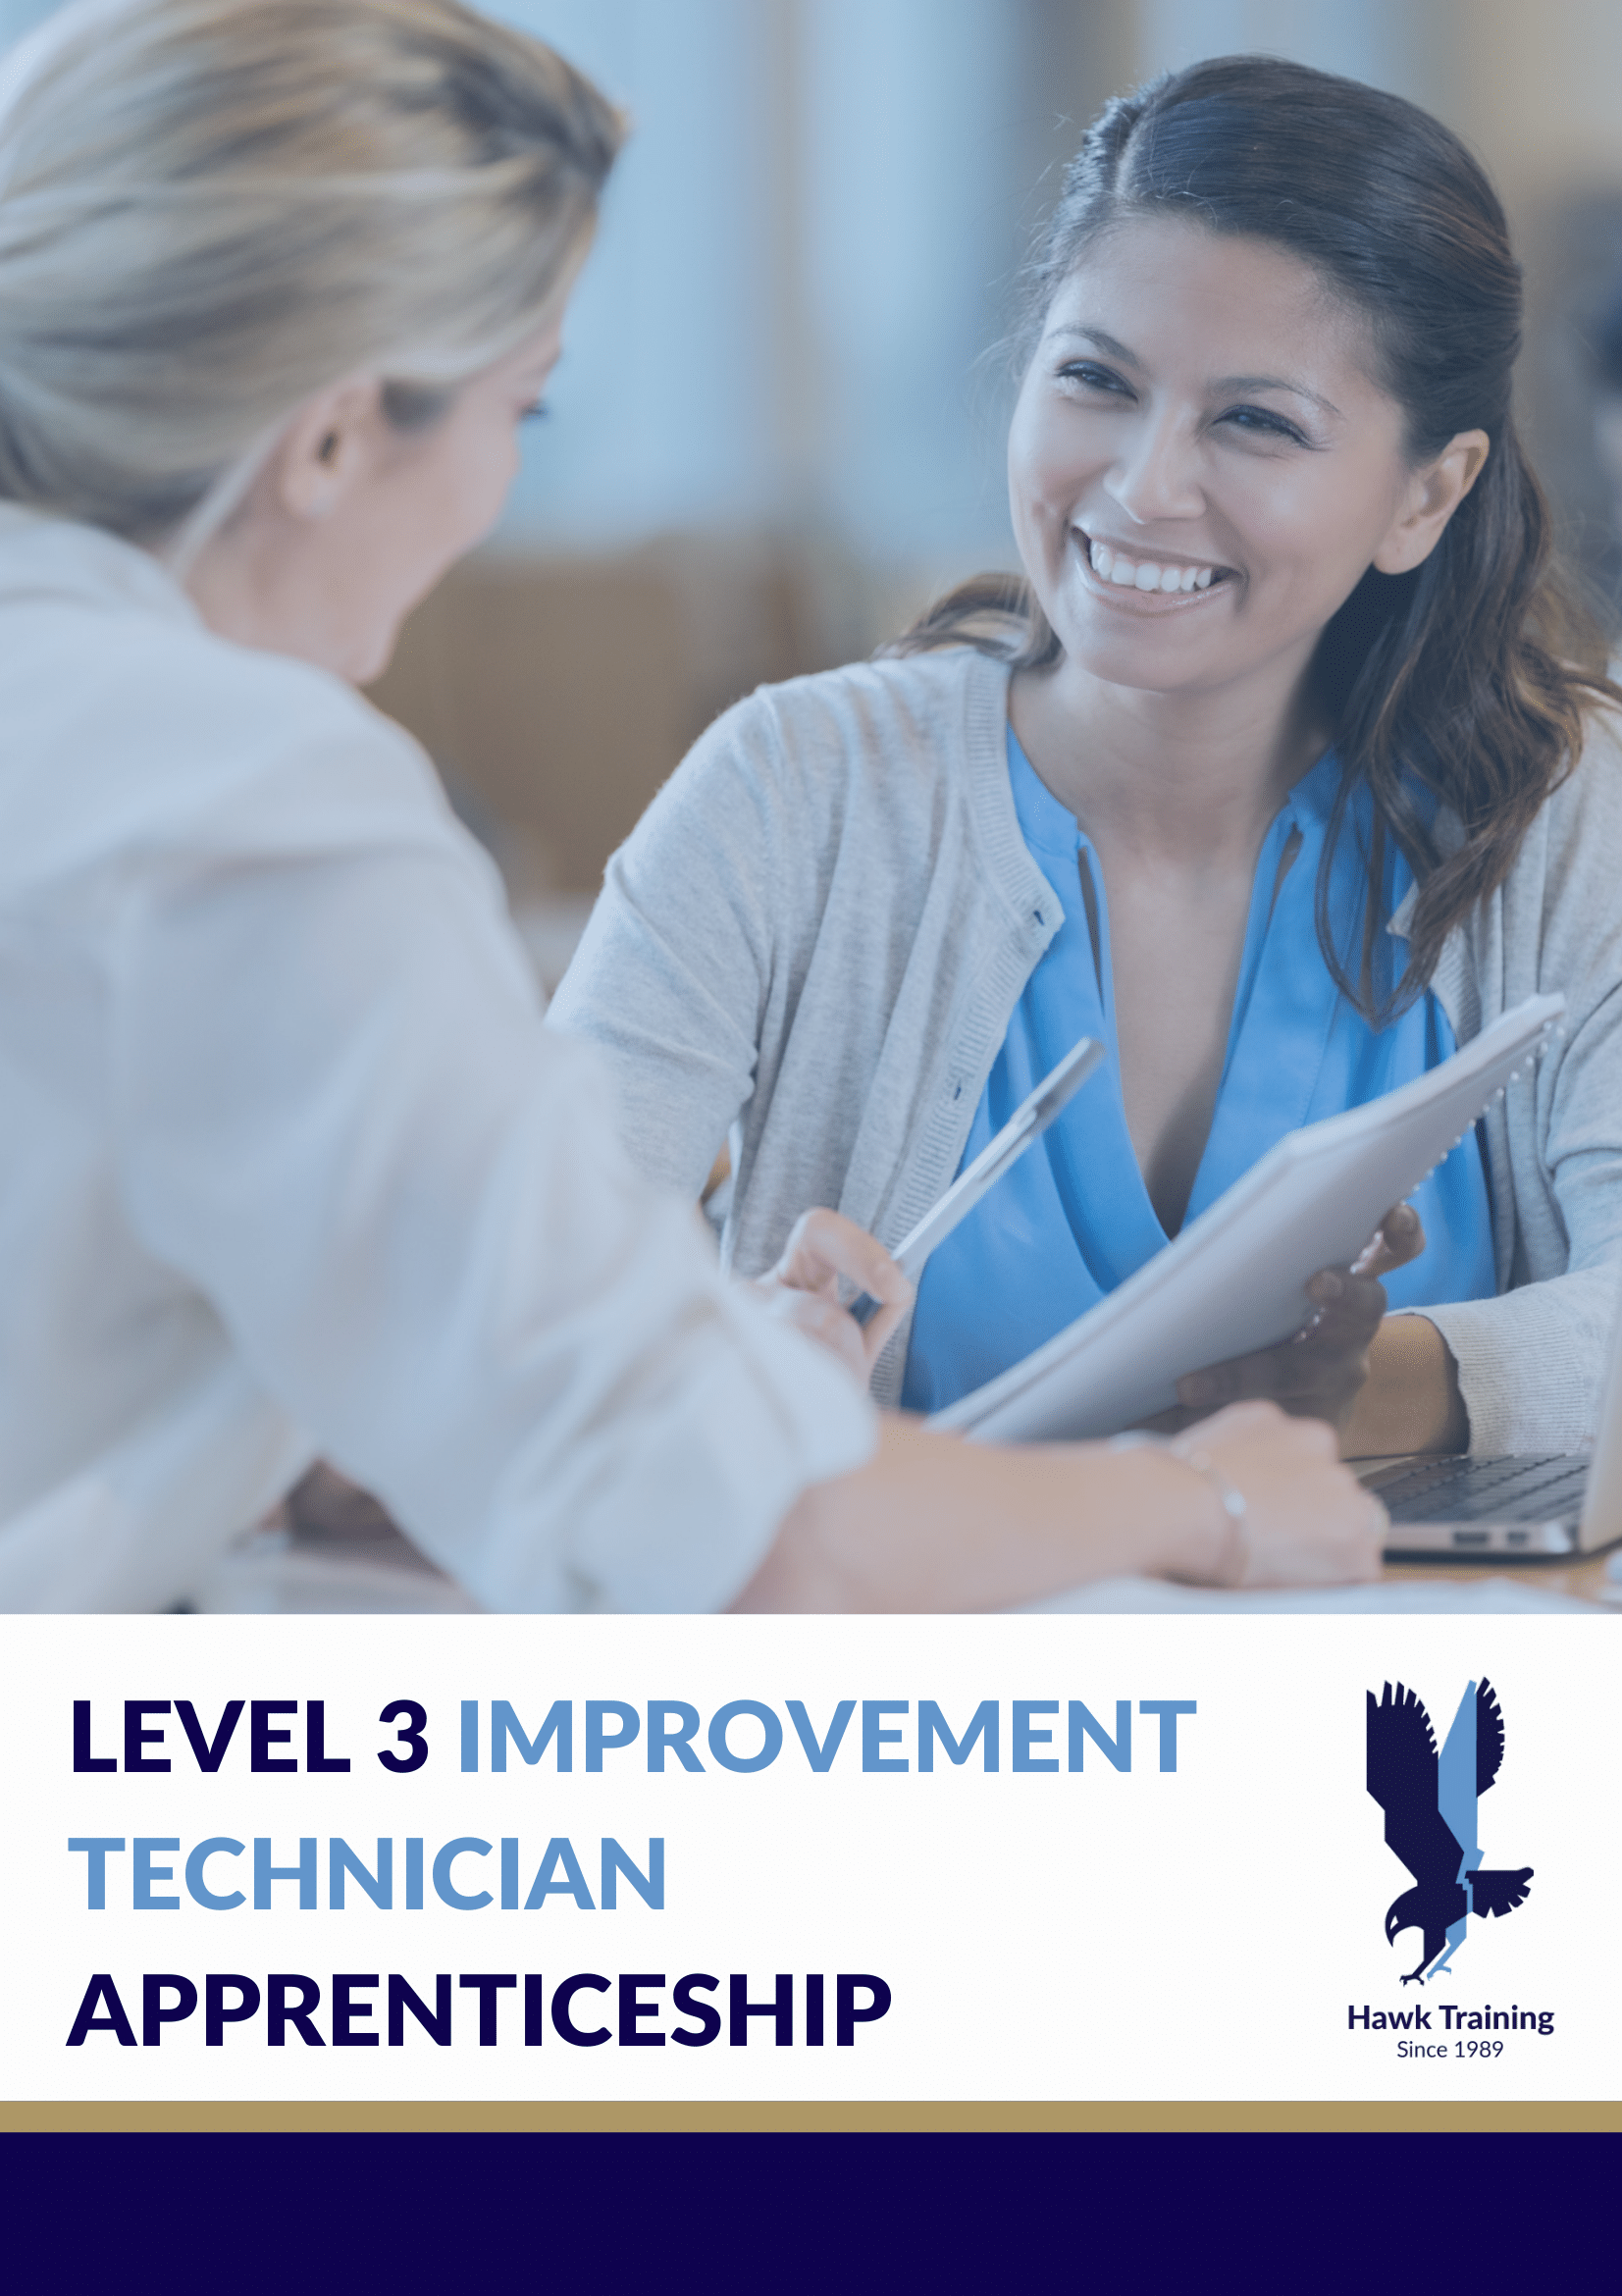 Level 3 Improvement Technician Apprenticeship Programme